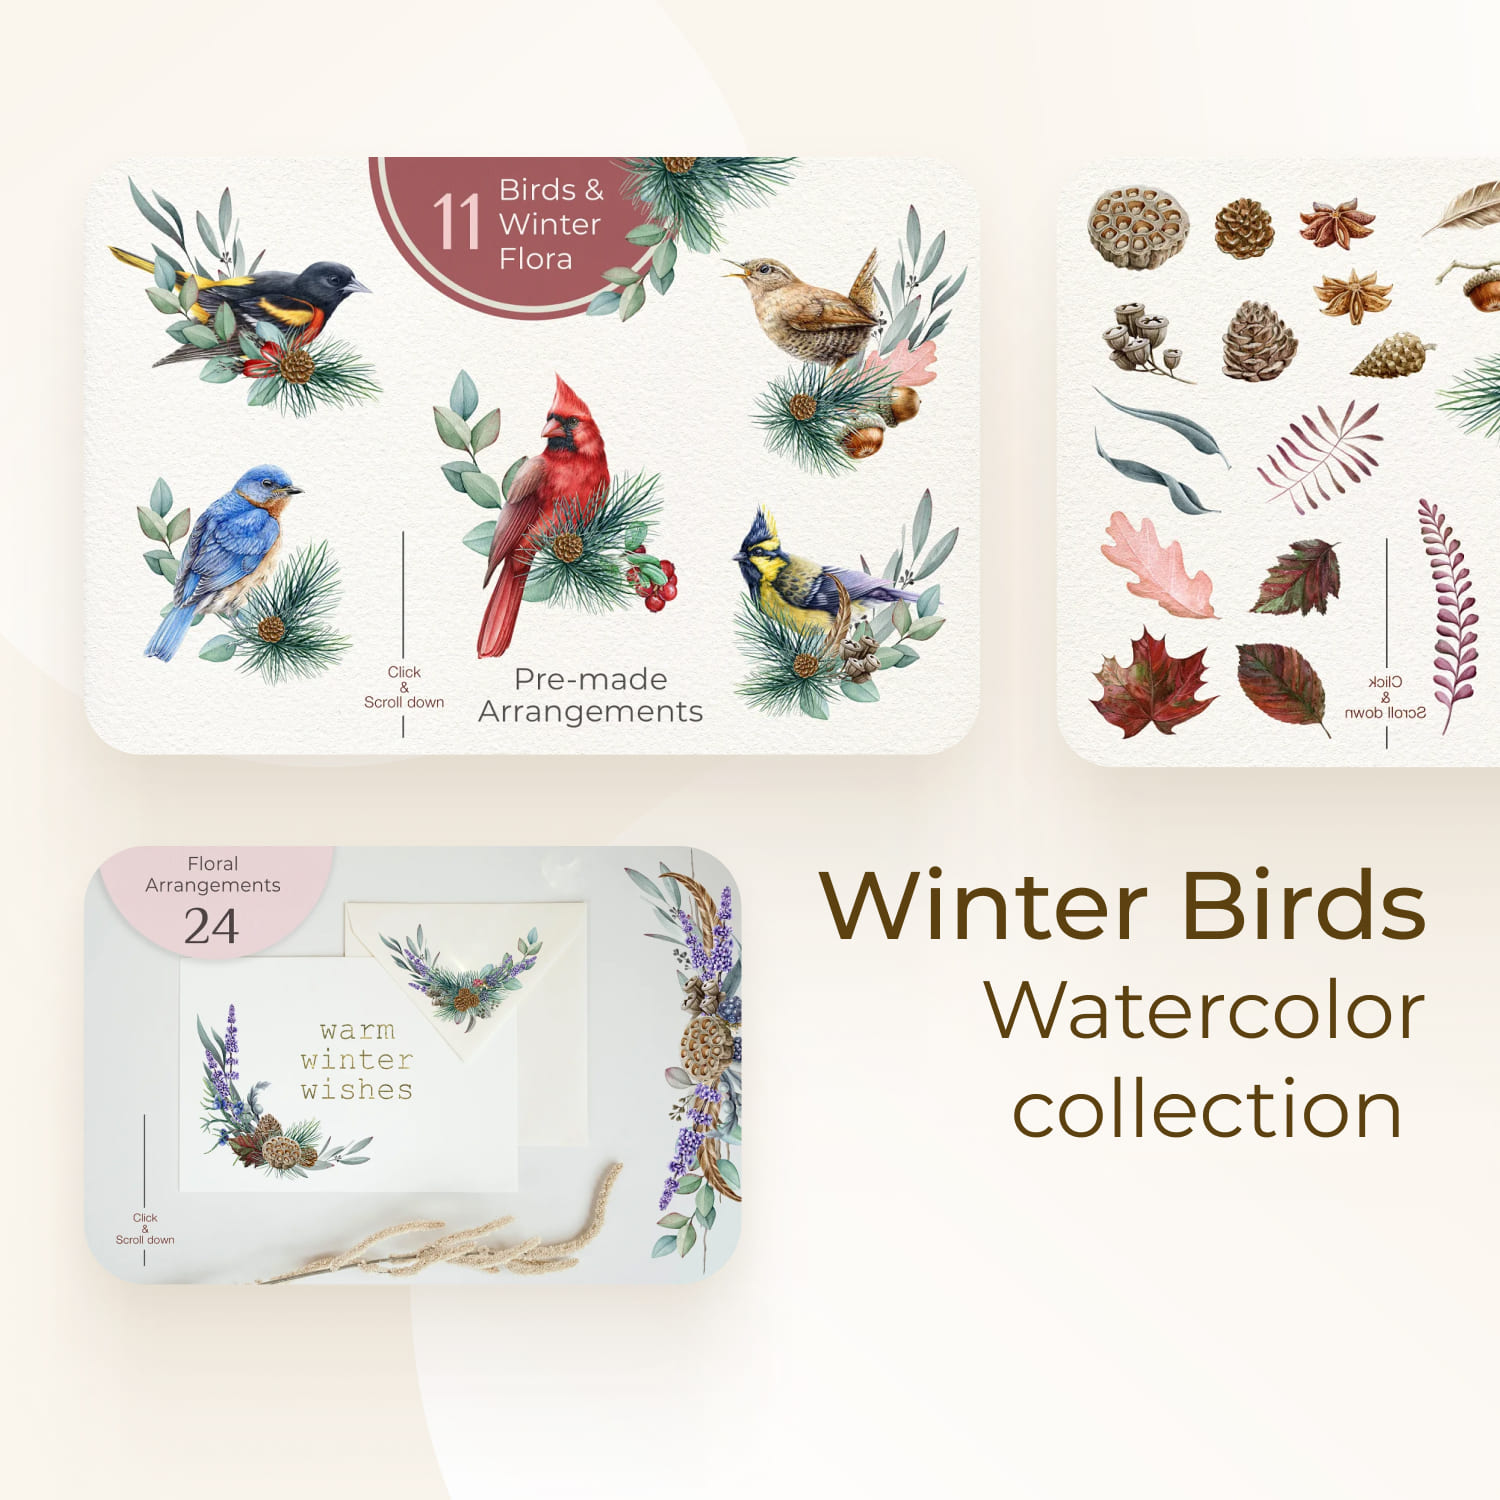 Winter Birds - Watercolor collection.